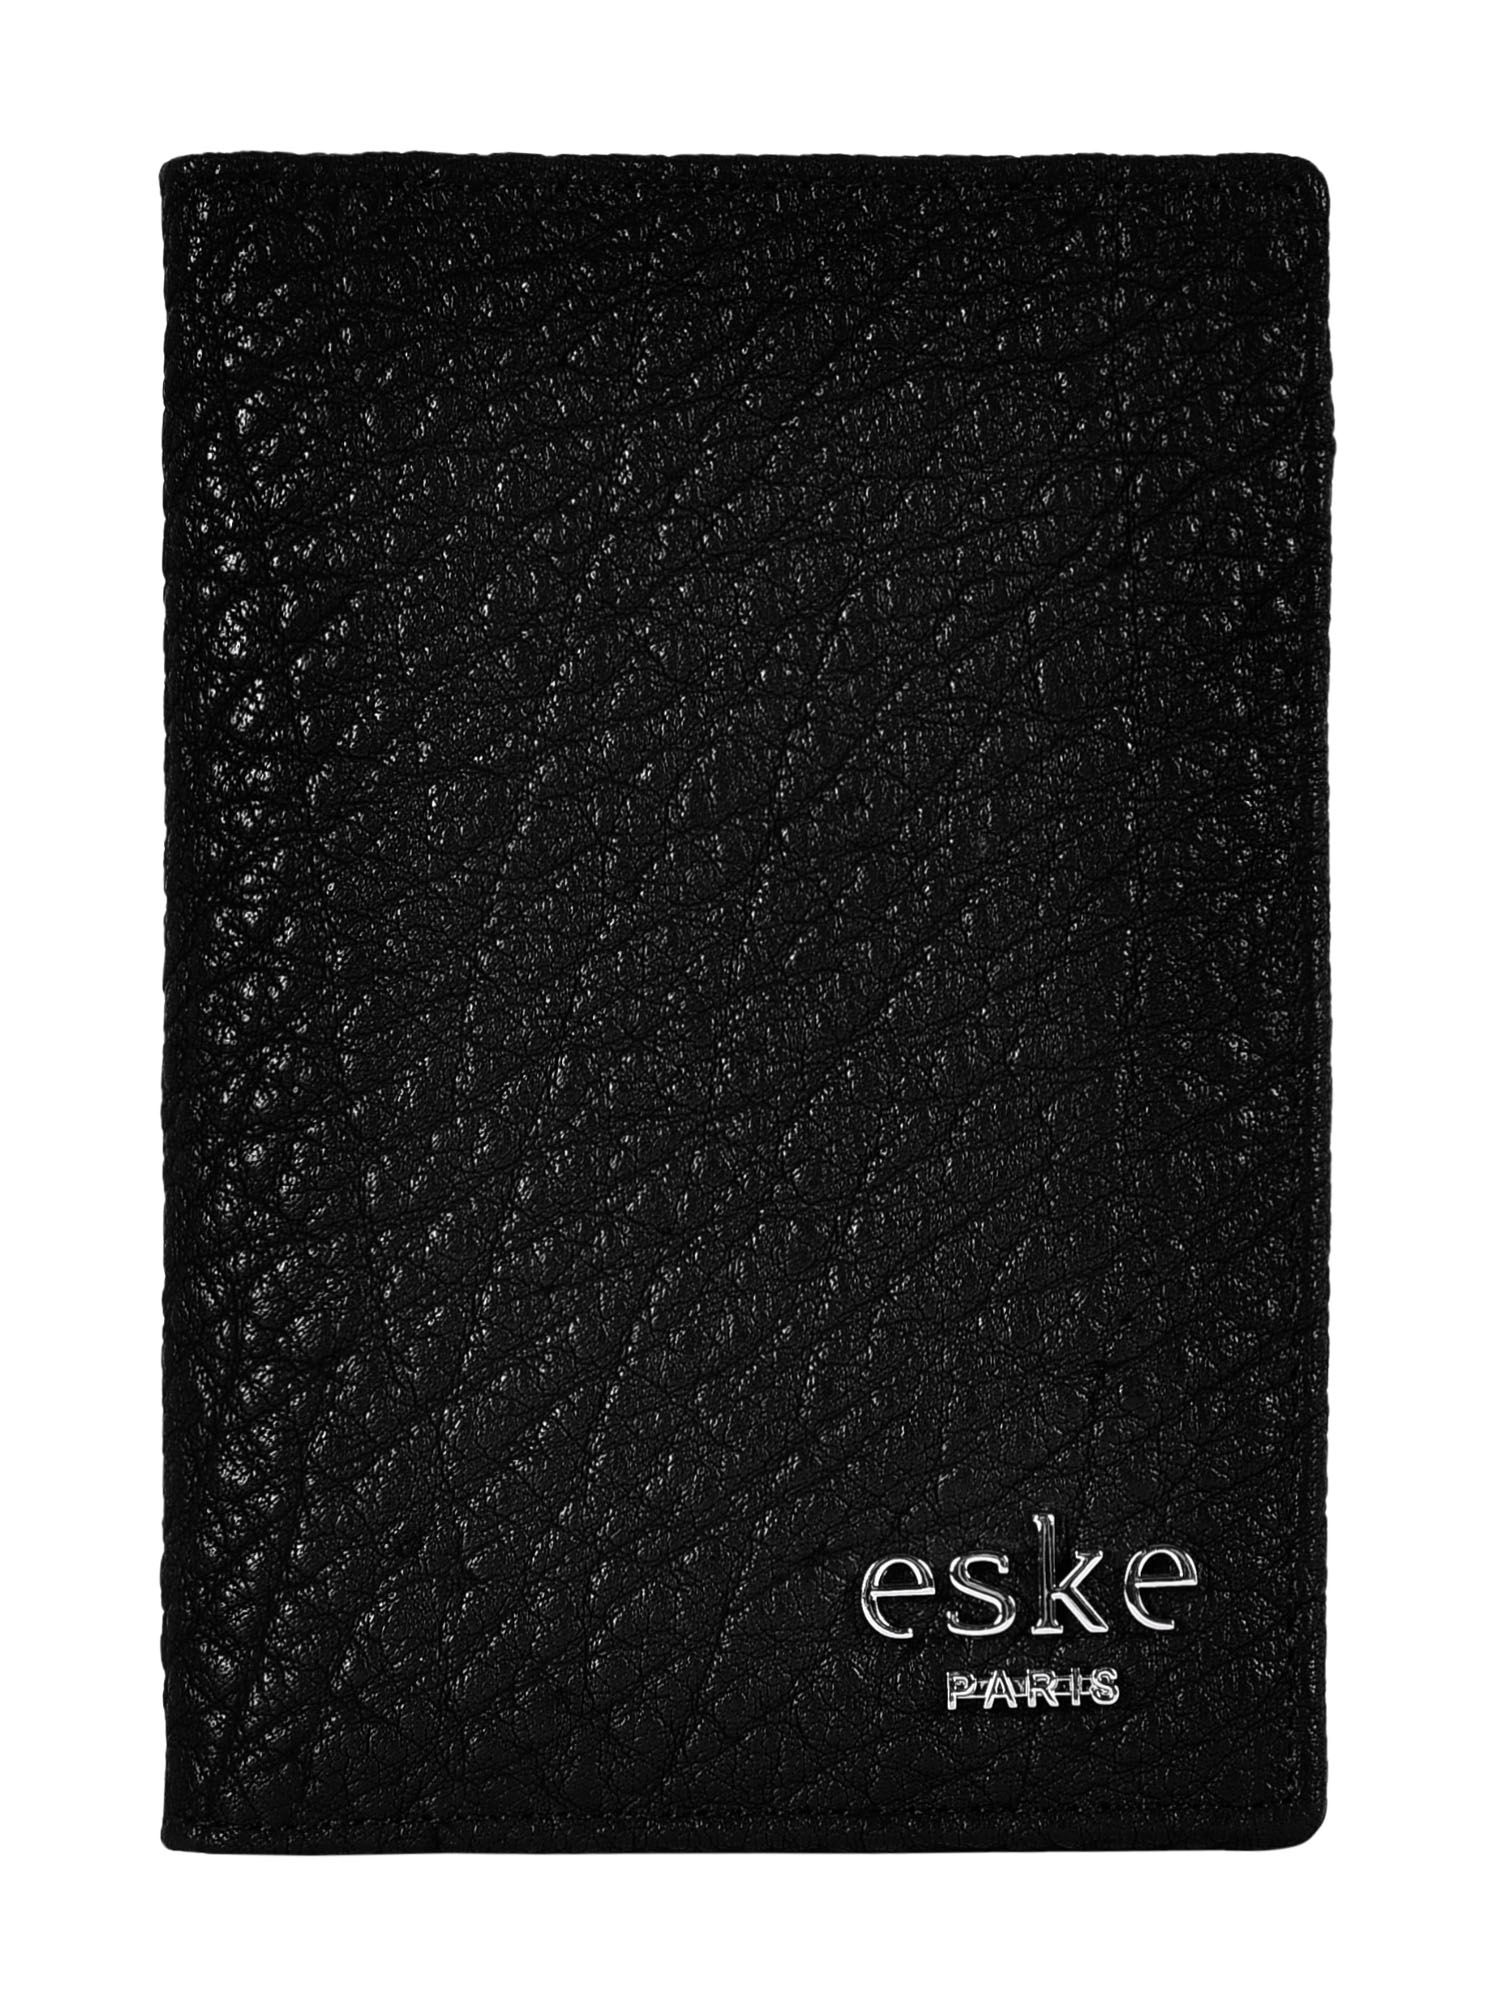 Eske Paris Enticer Passport Case,Black